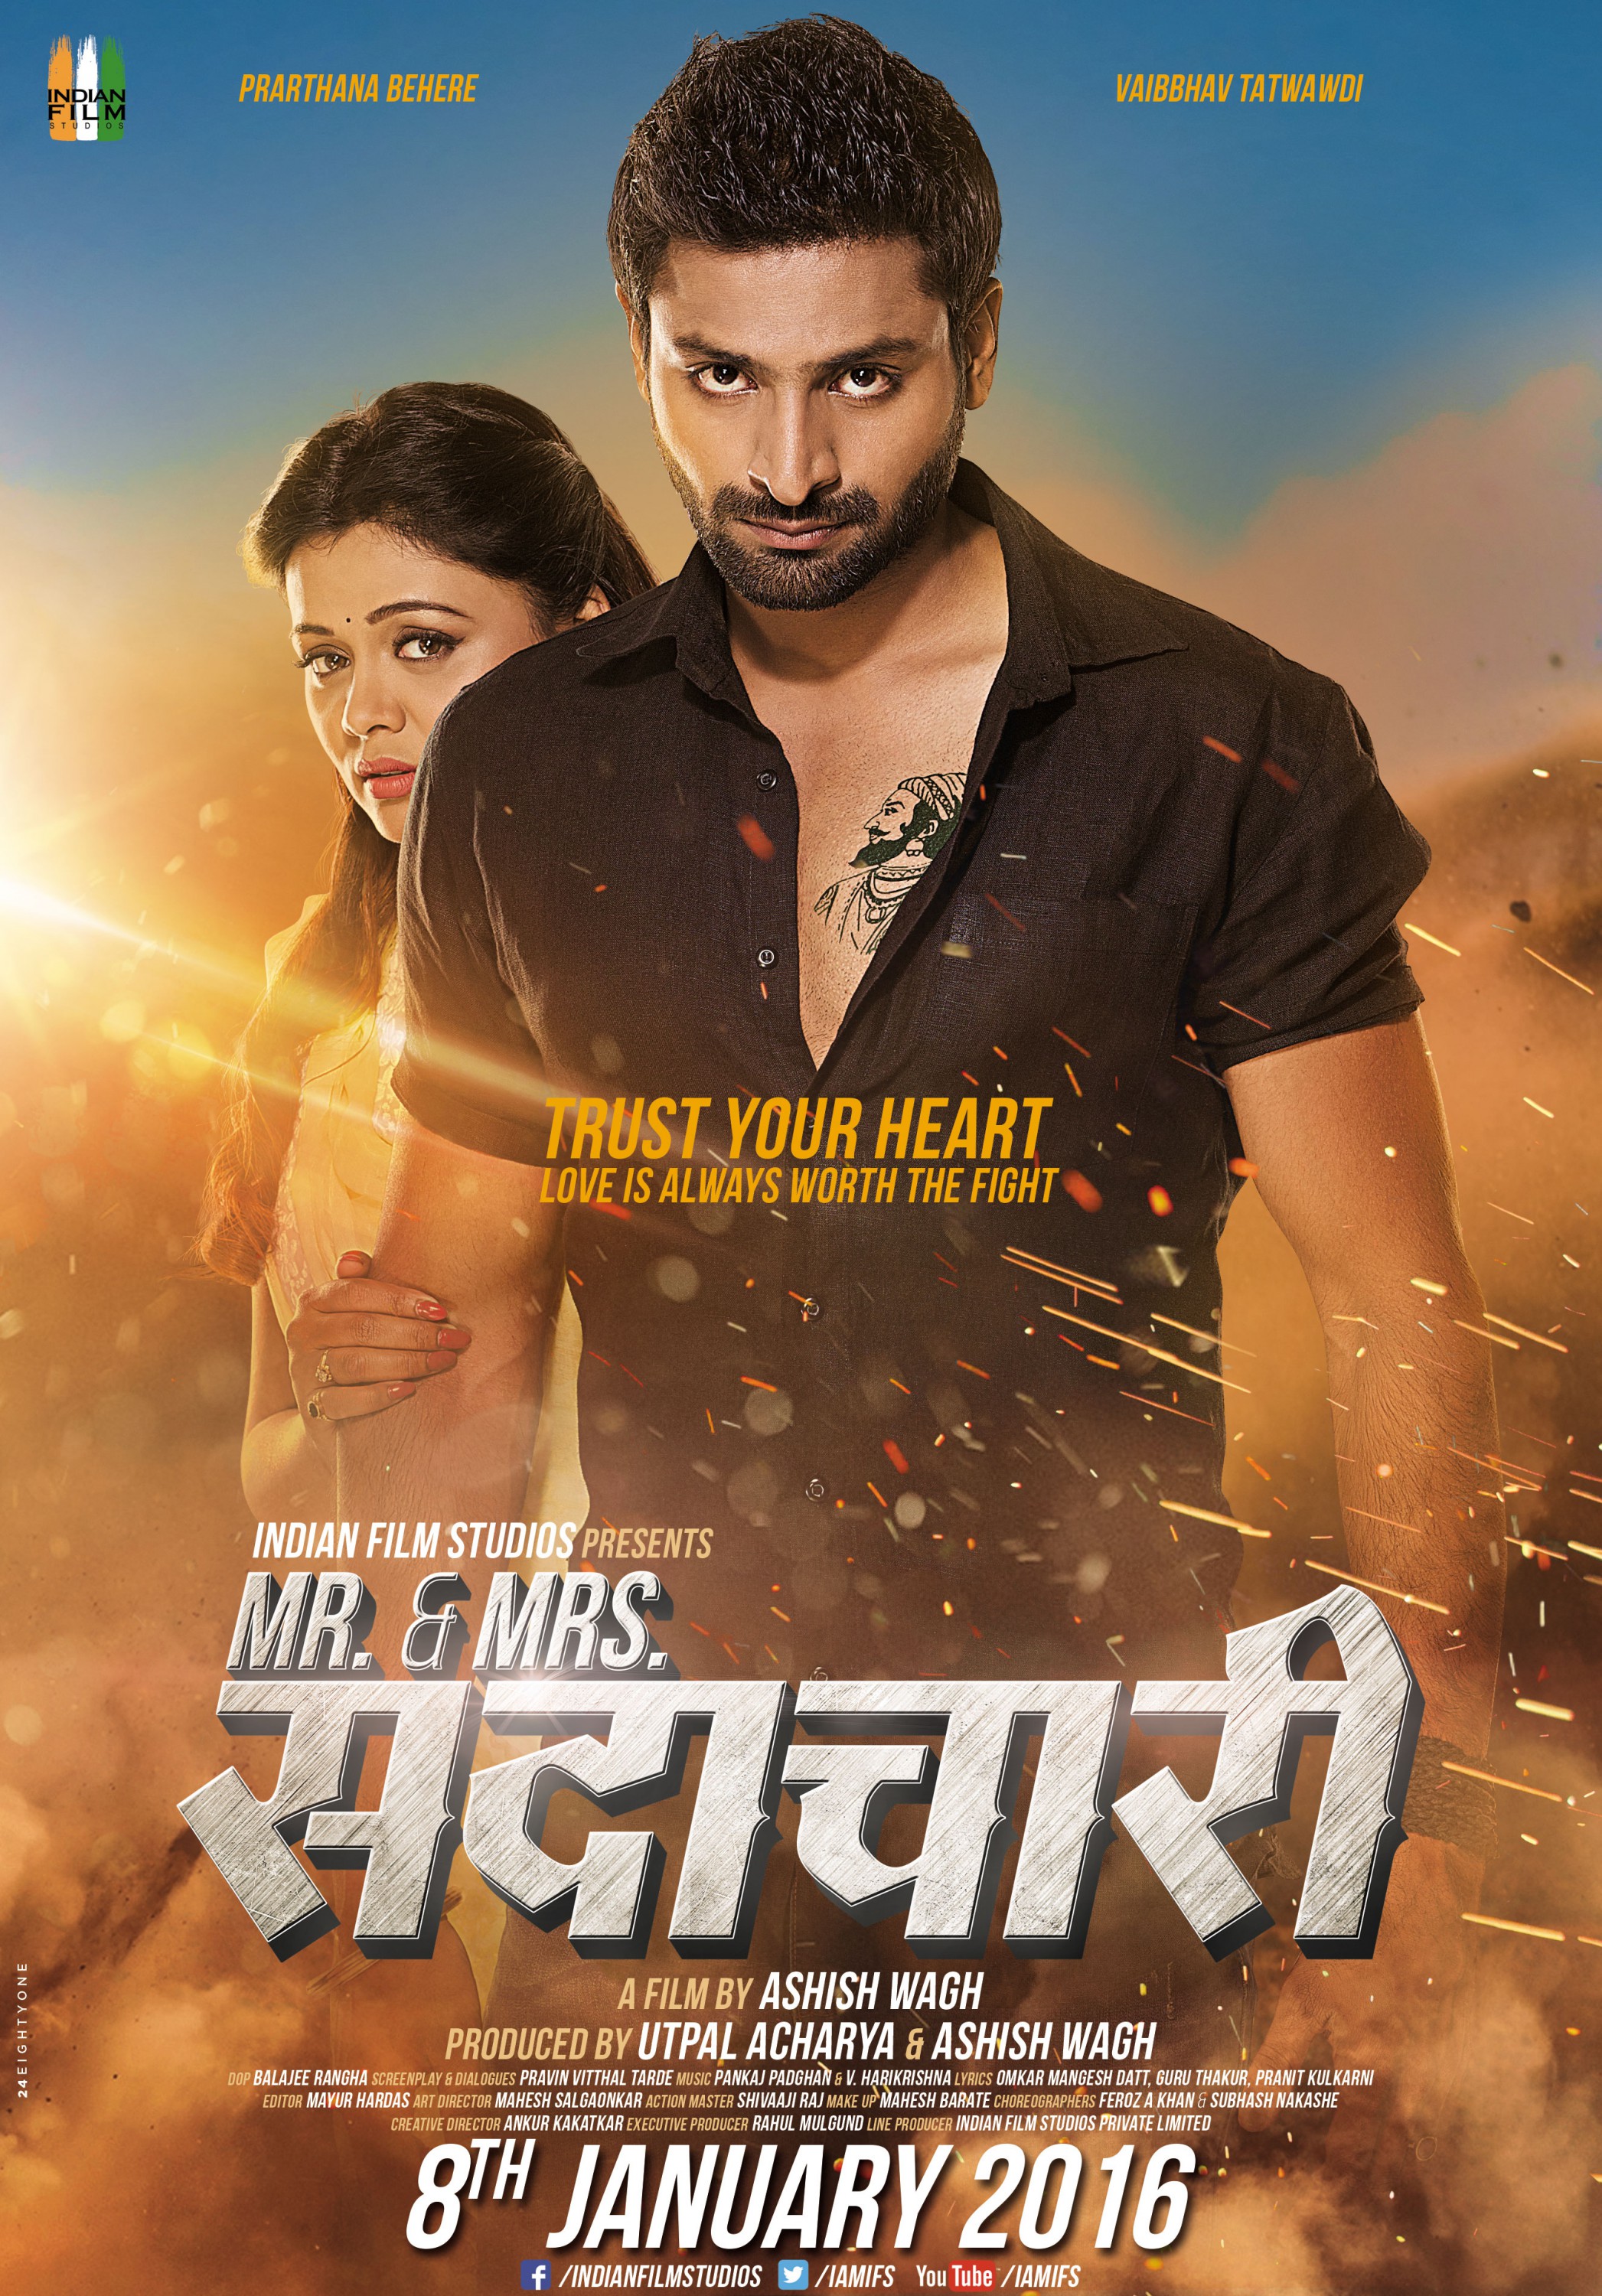 Mega Sized Movie Poster Image for Mr & Mrs Sadachari (#1 of 2)